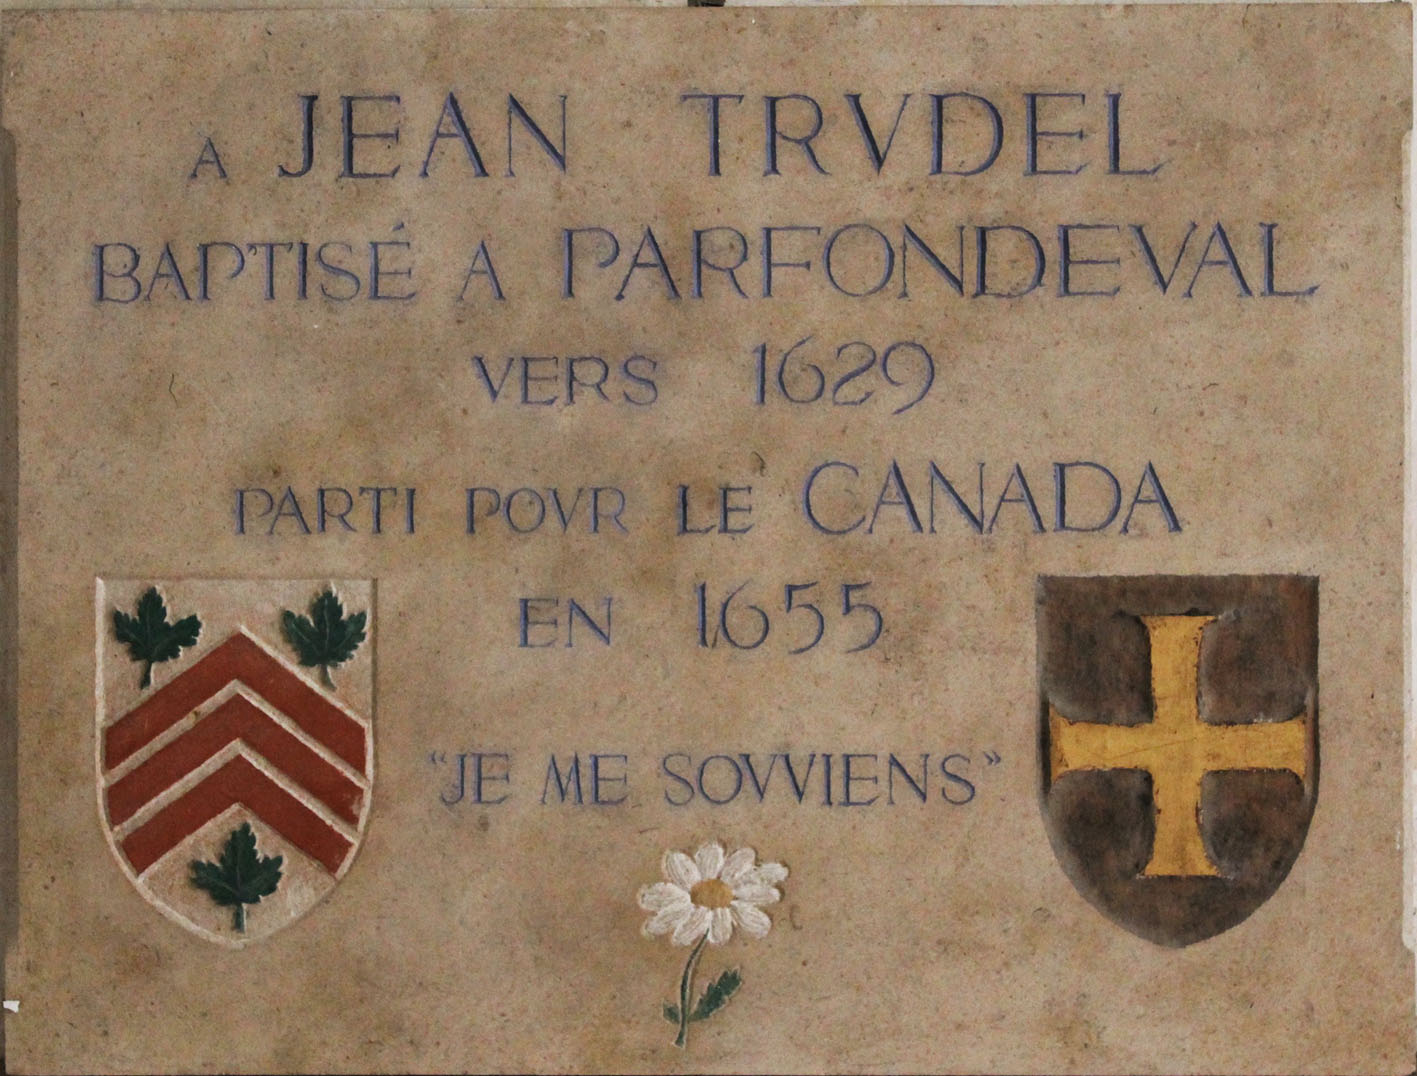 Commemorative plaque in Parfondeval